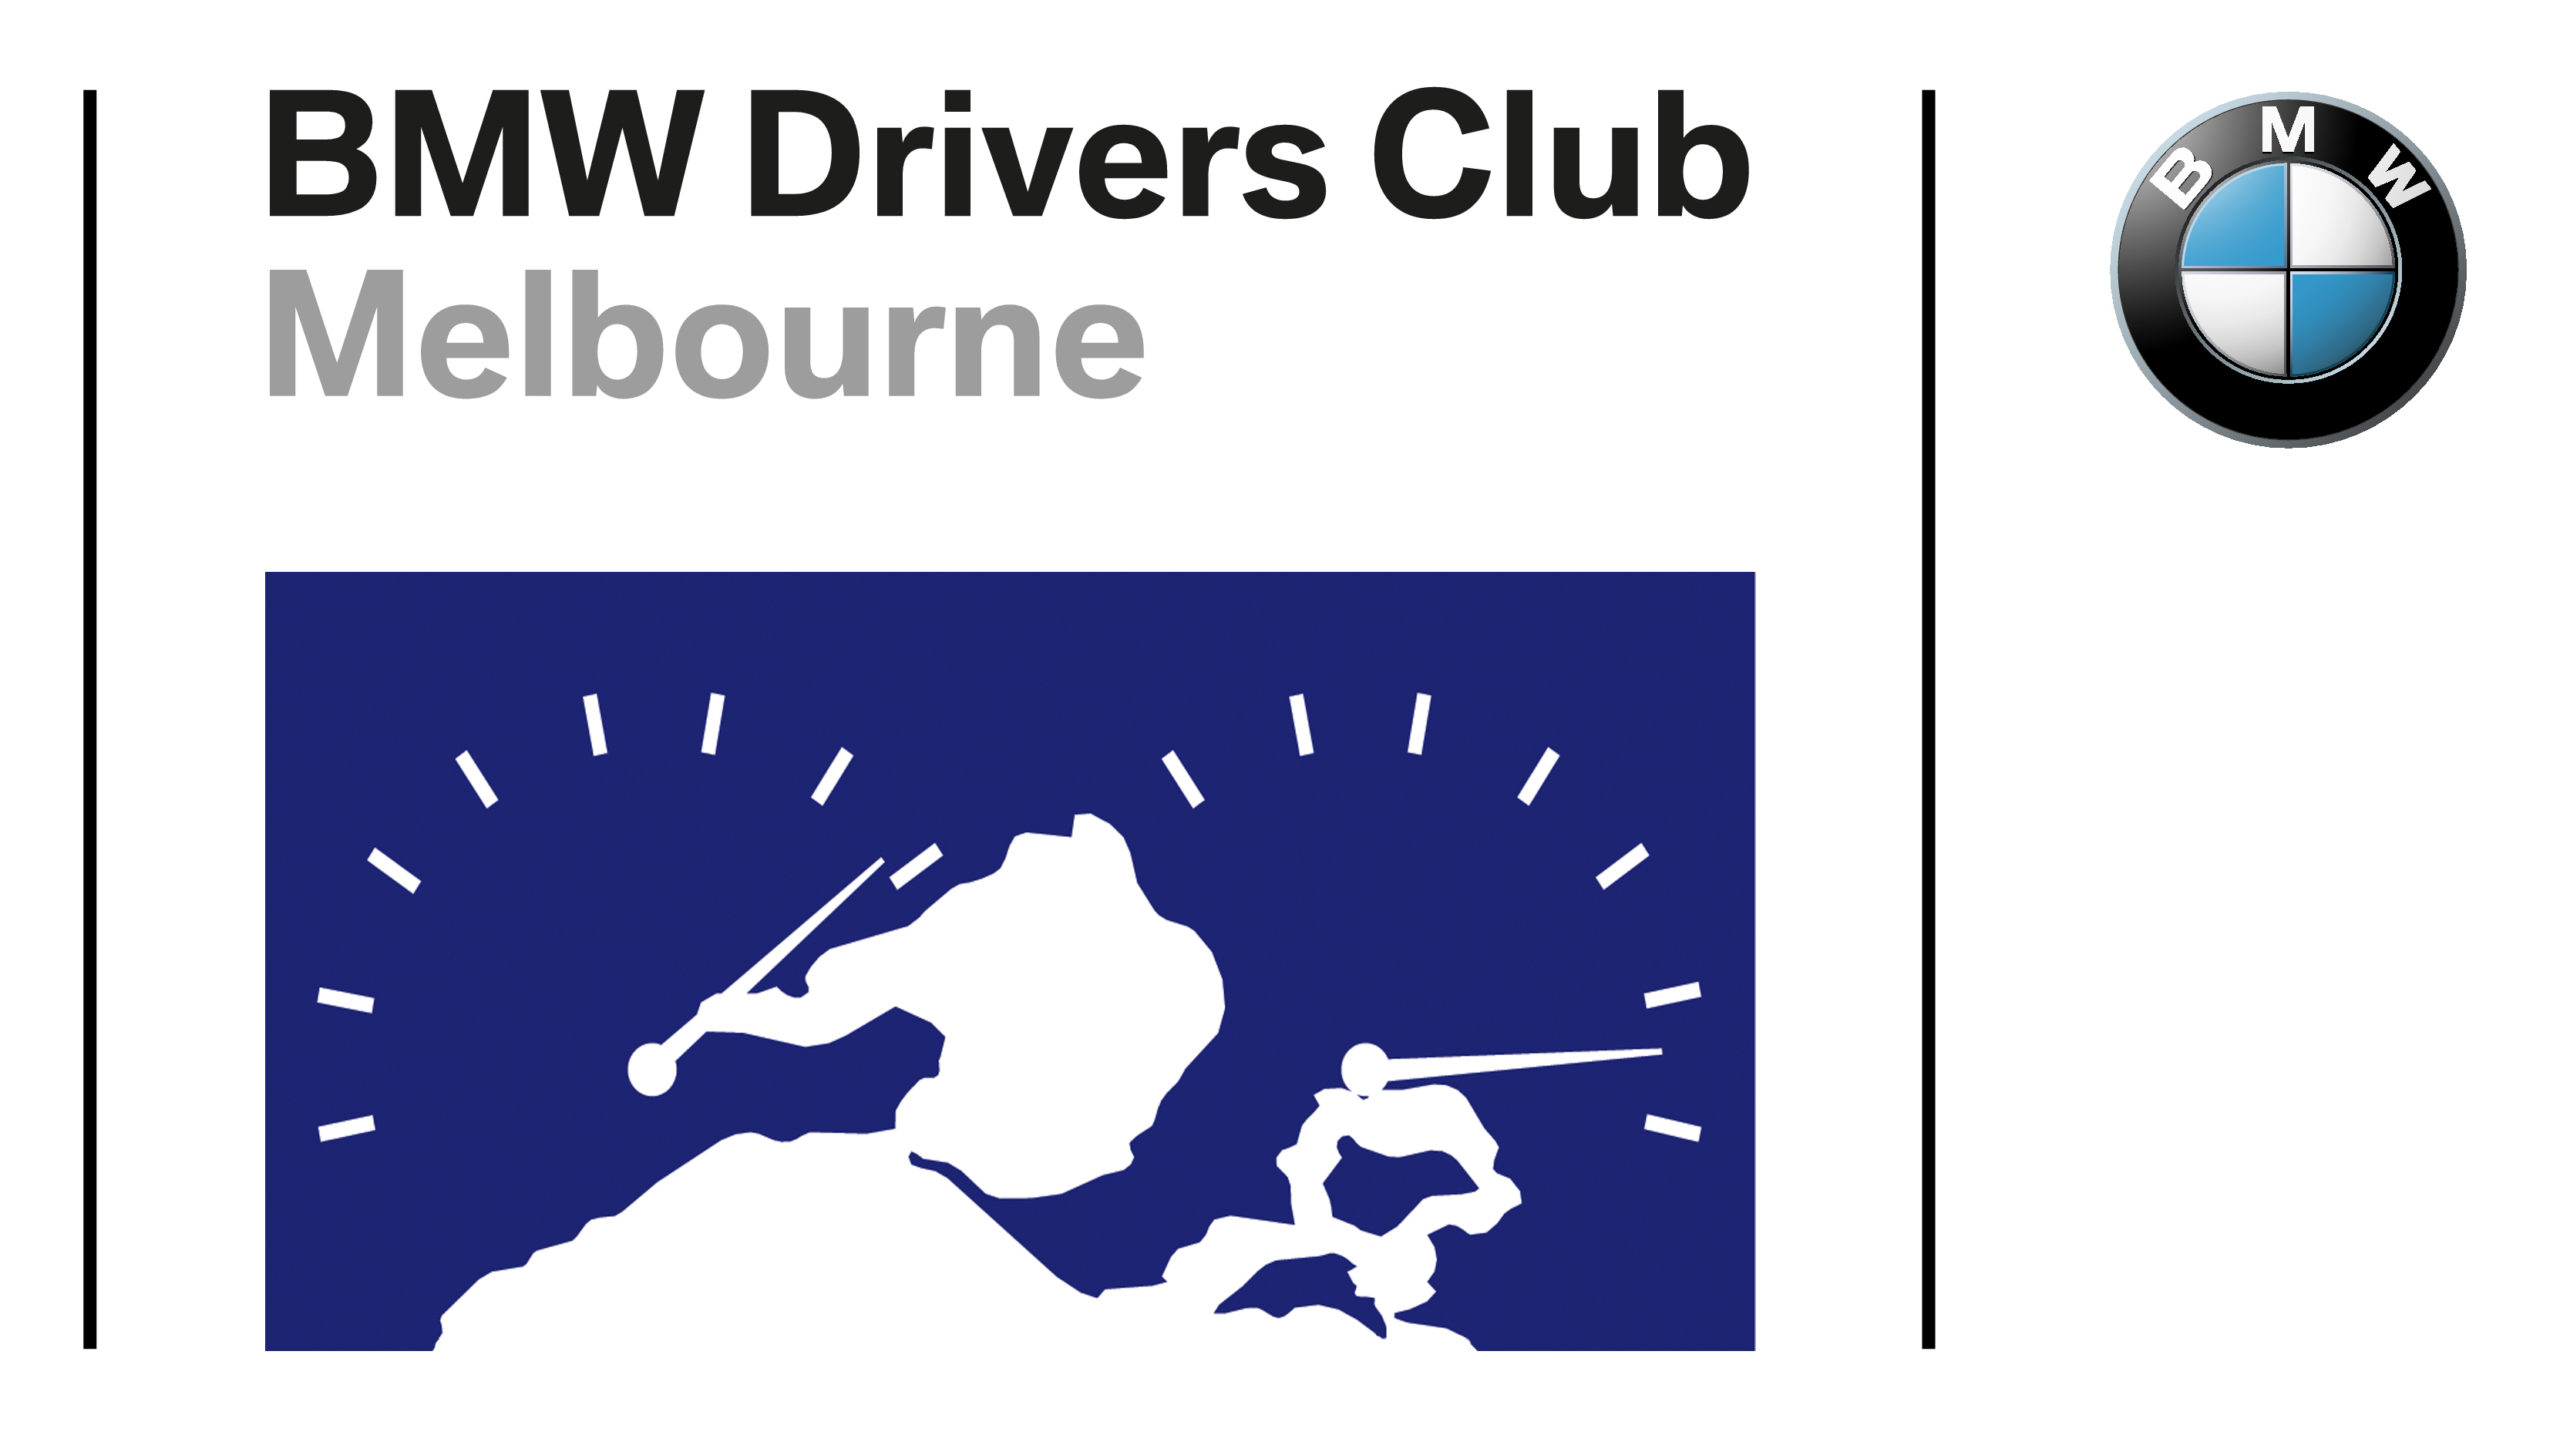 BMW Drivers Club Melbourne Inc - Networkcafe.com.au